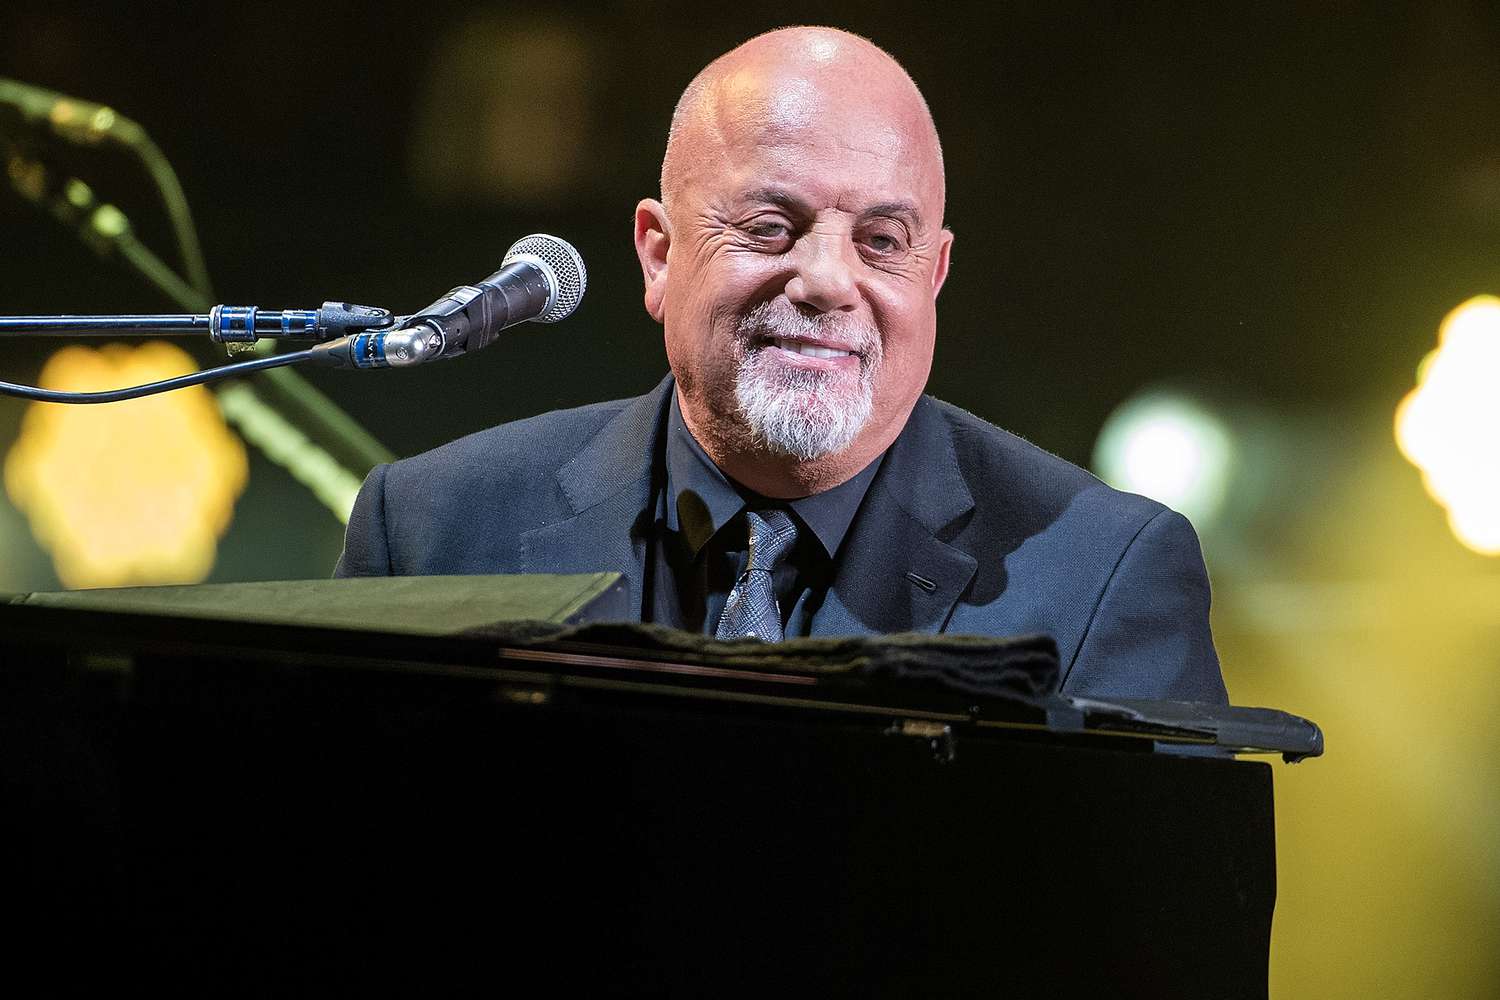 Billy Joel performing at Madison Square Garden